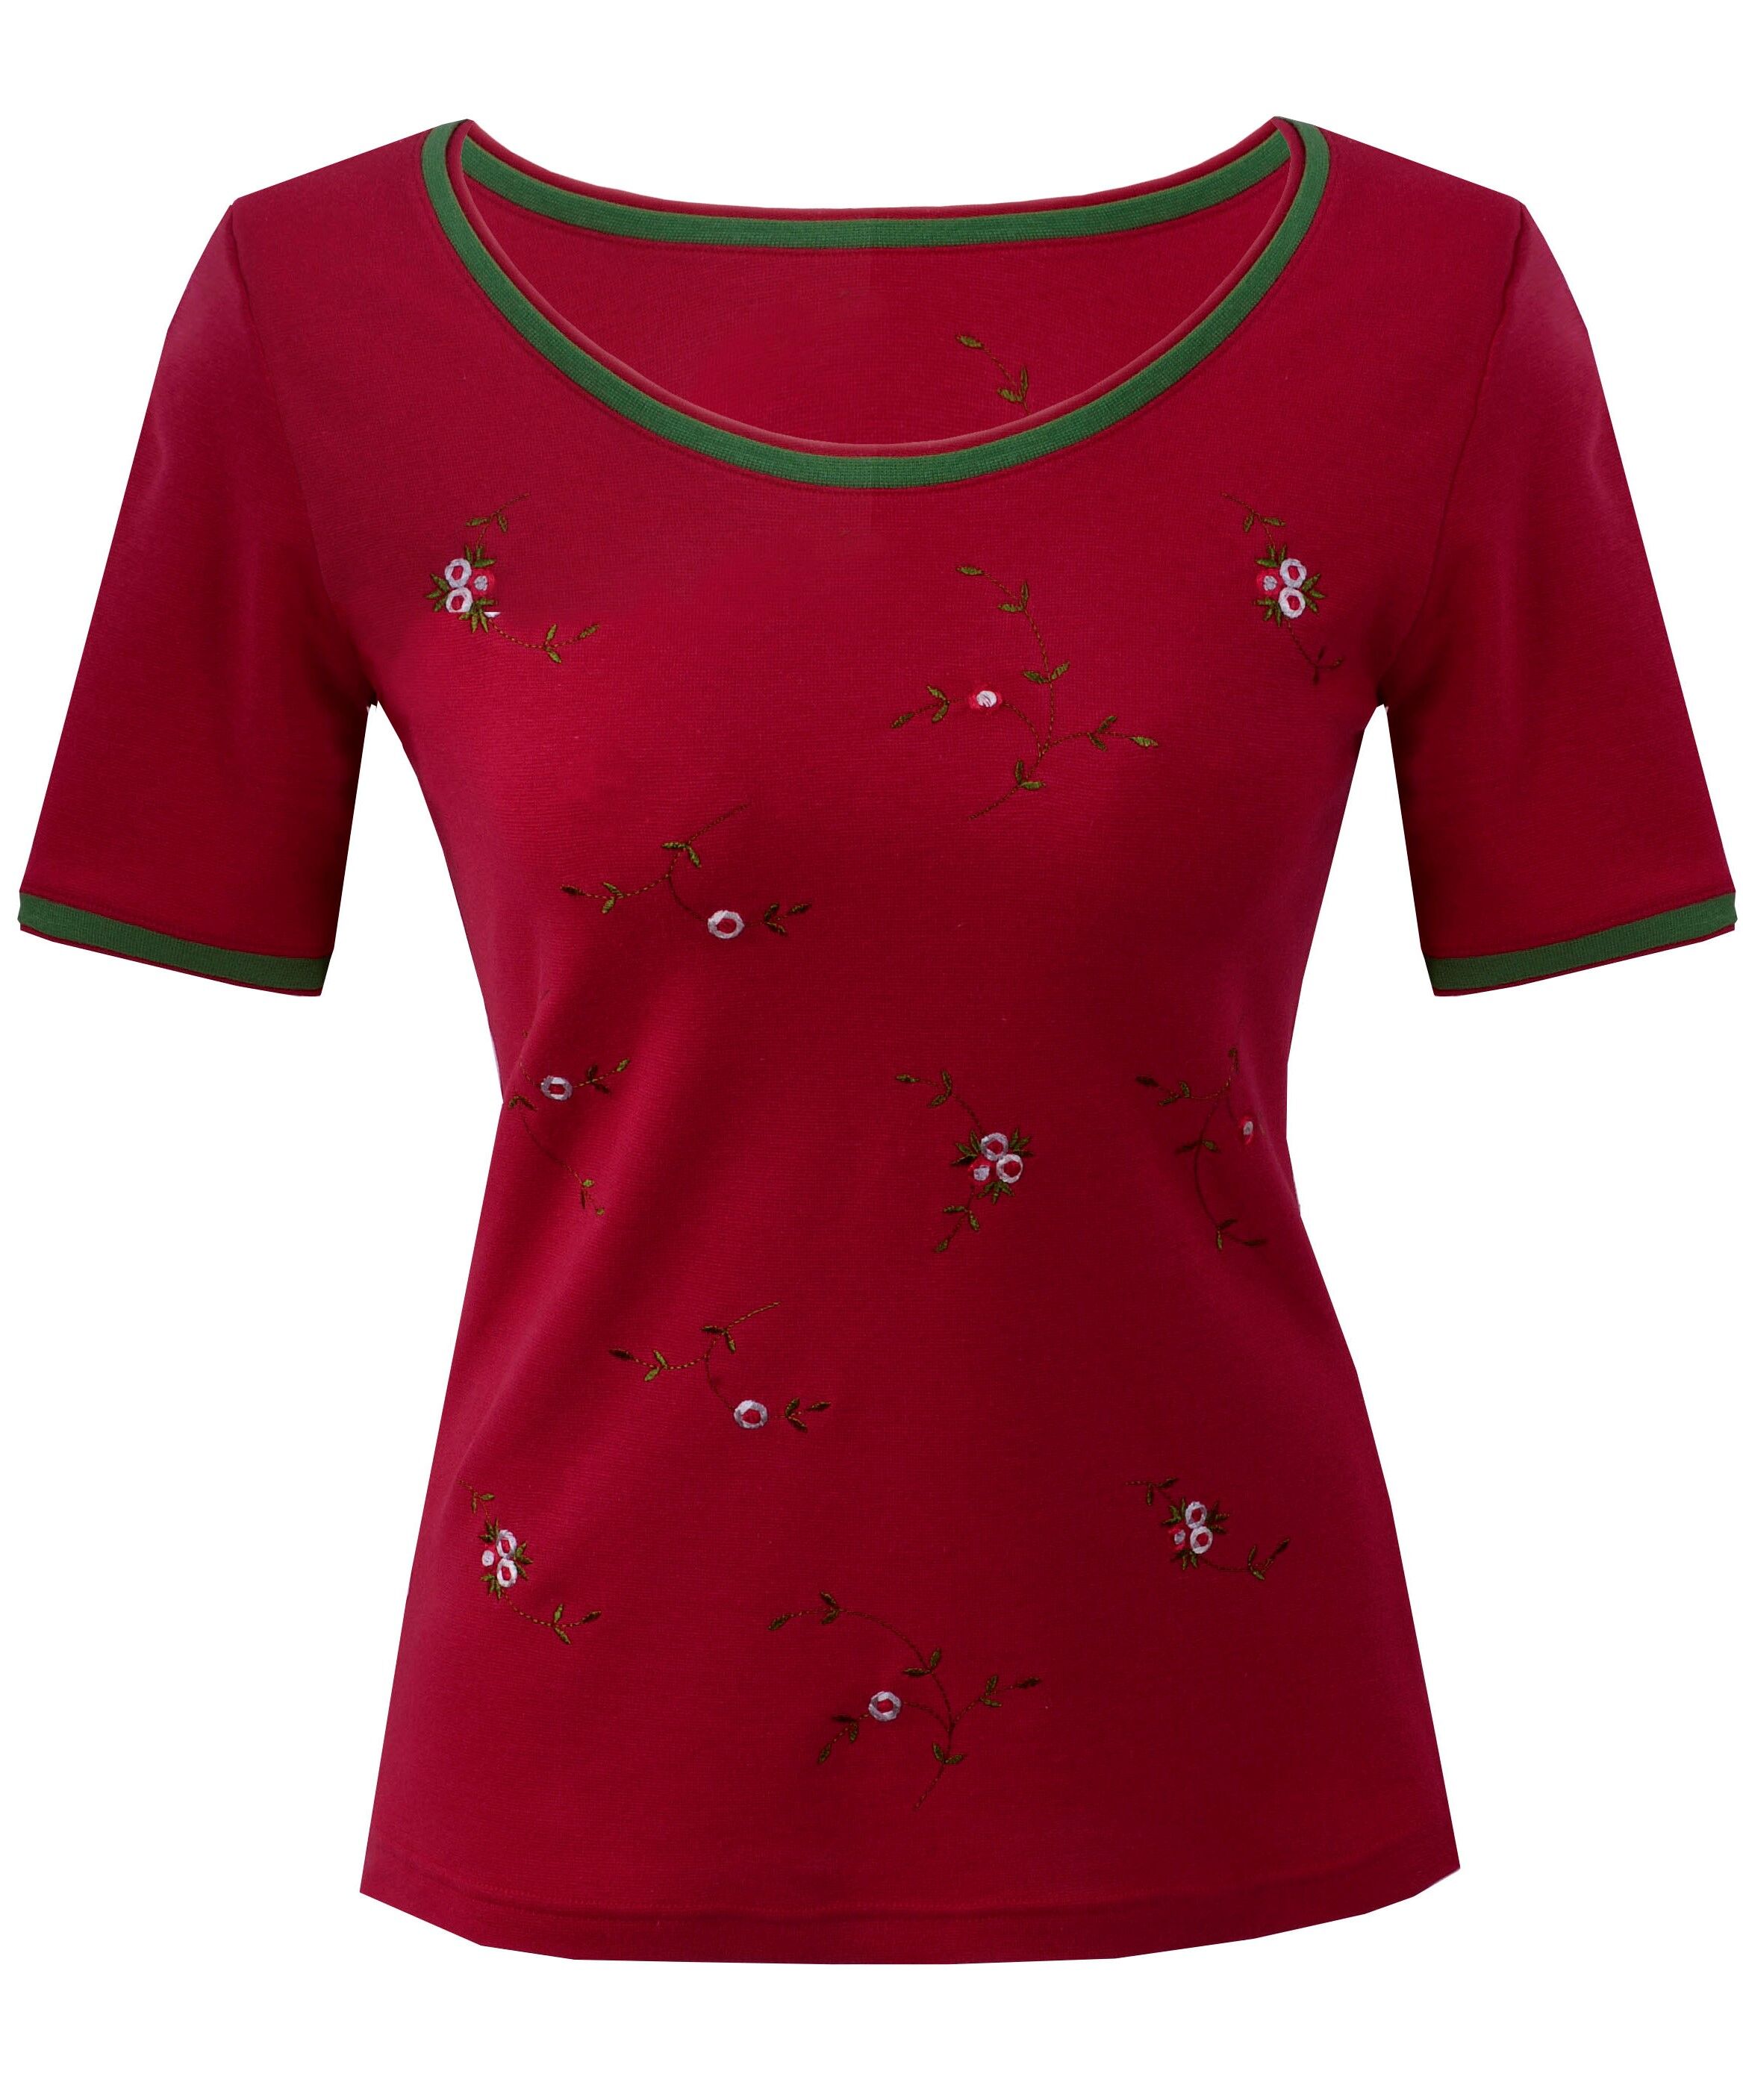 Premium Trachtenshirt "Arido" Damen T-Shirt Rosen-Stickerei Schwarz + Rot